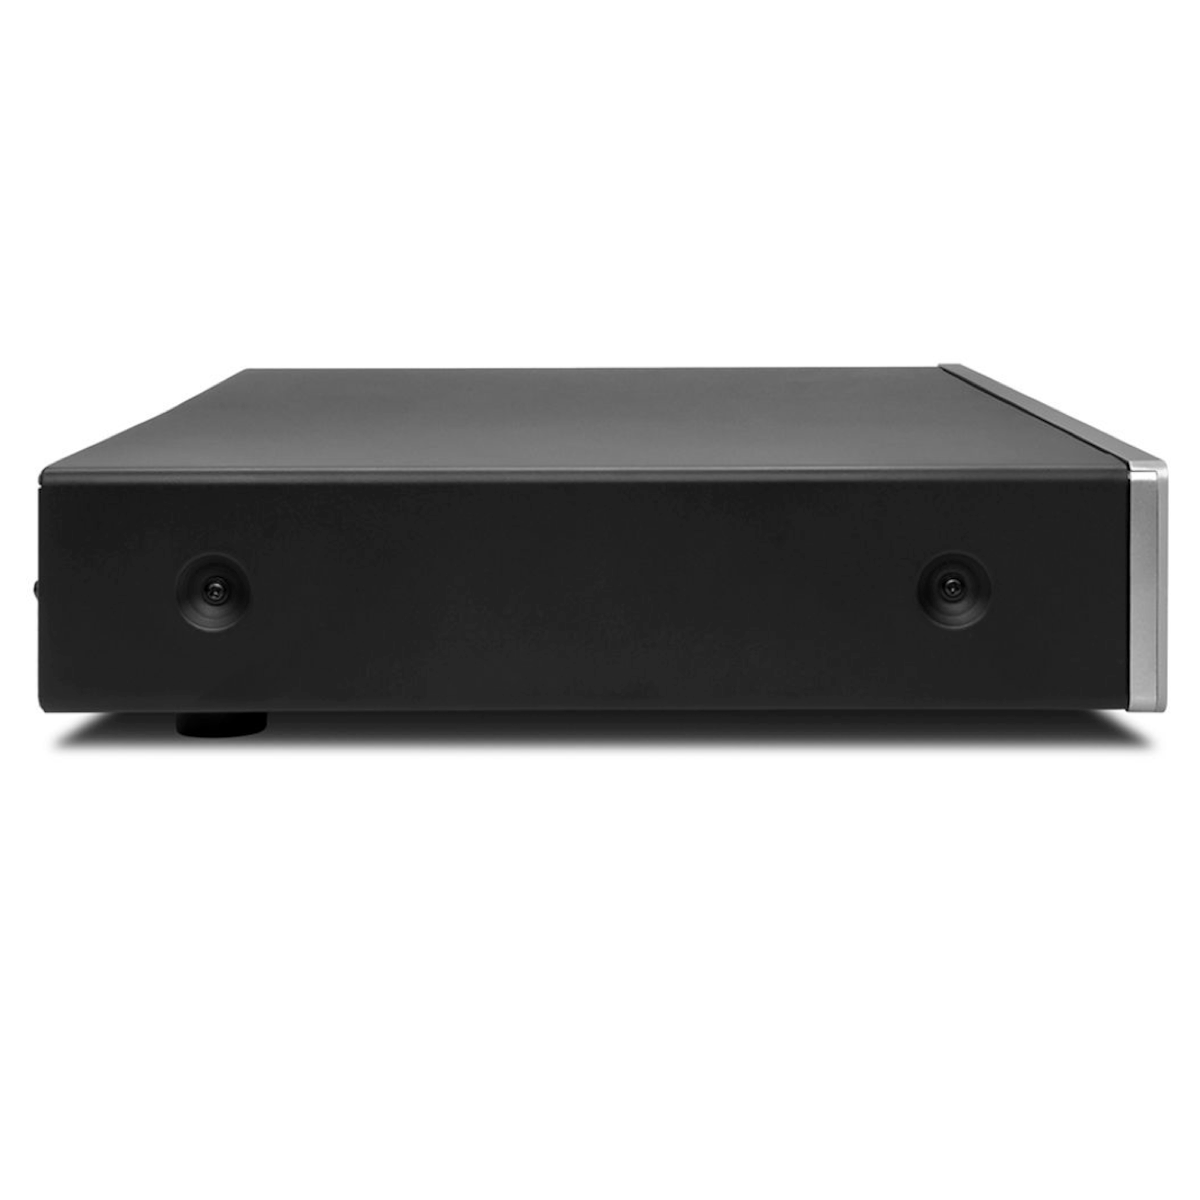 Cambridge Audio AX-C35 - CD player - AVStore